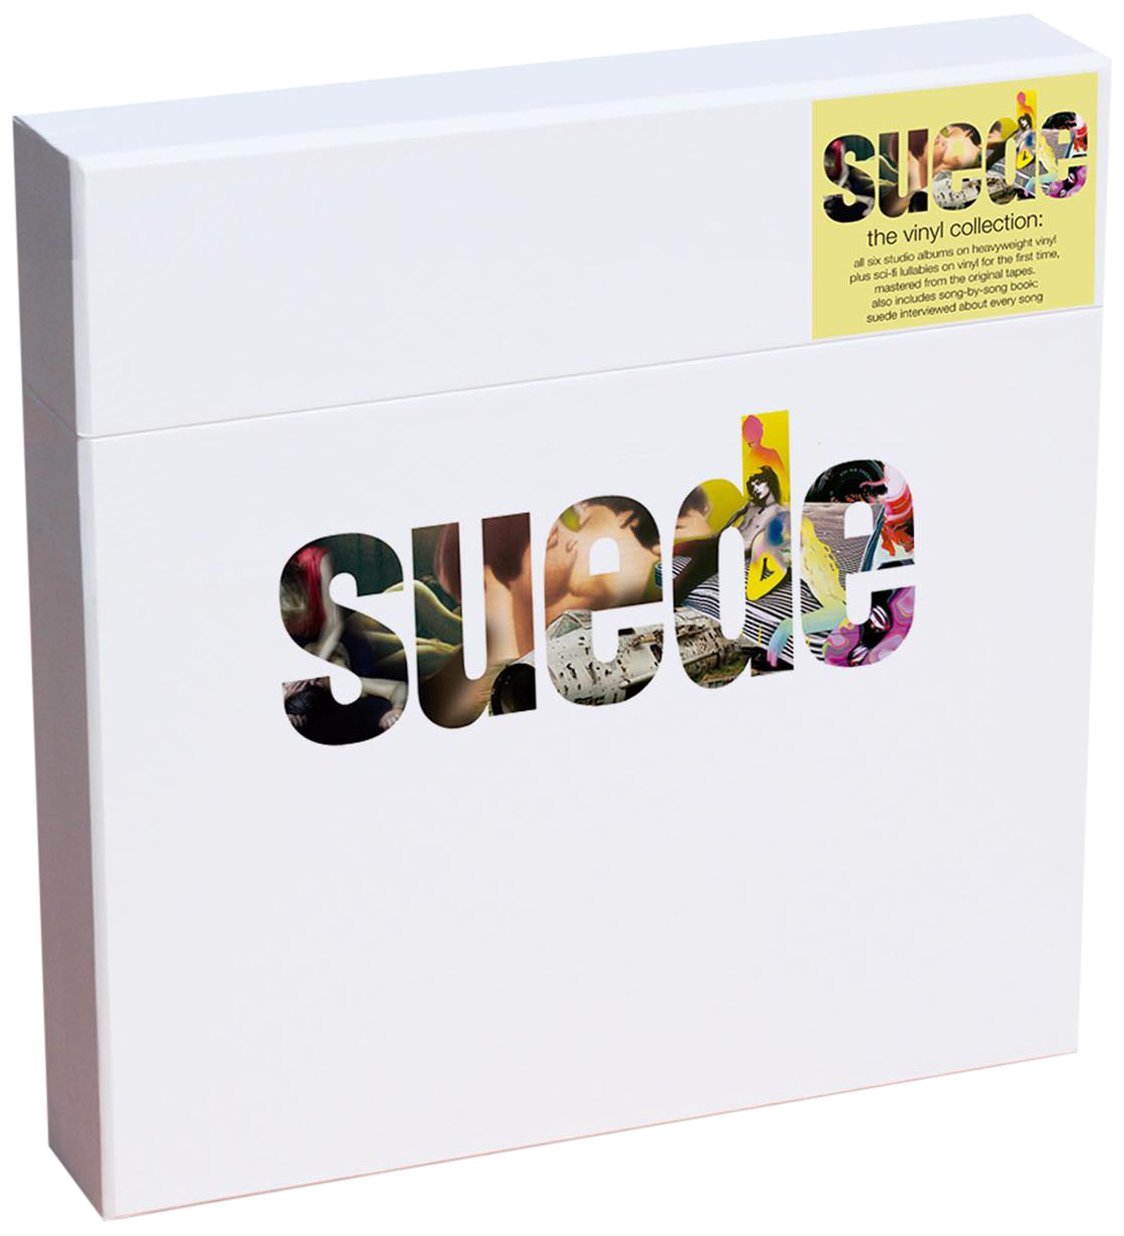 Suede Vinyl Collection price drop – SuperDeluxeEdition